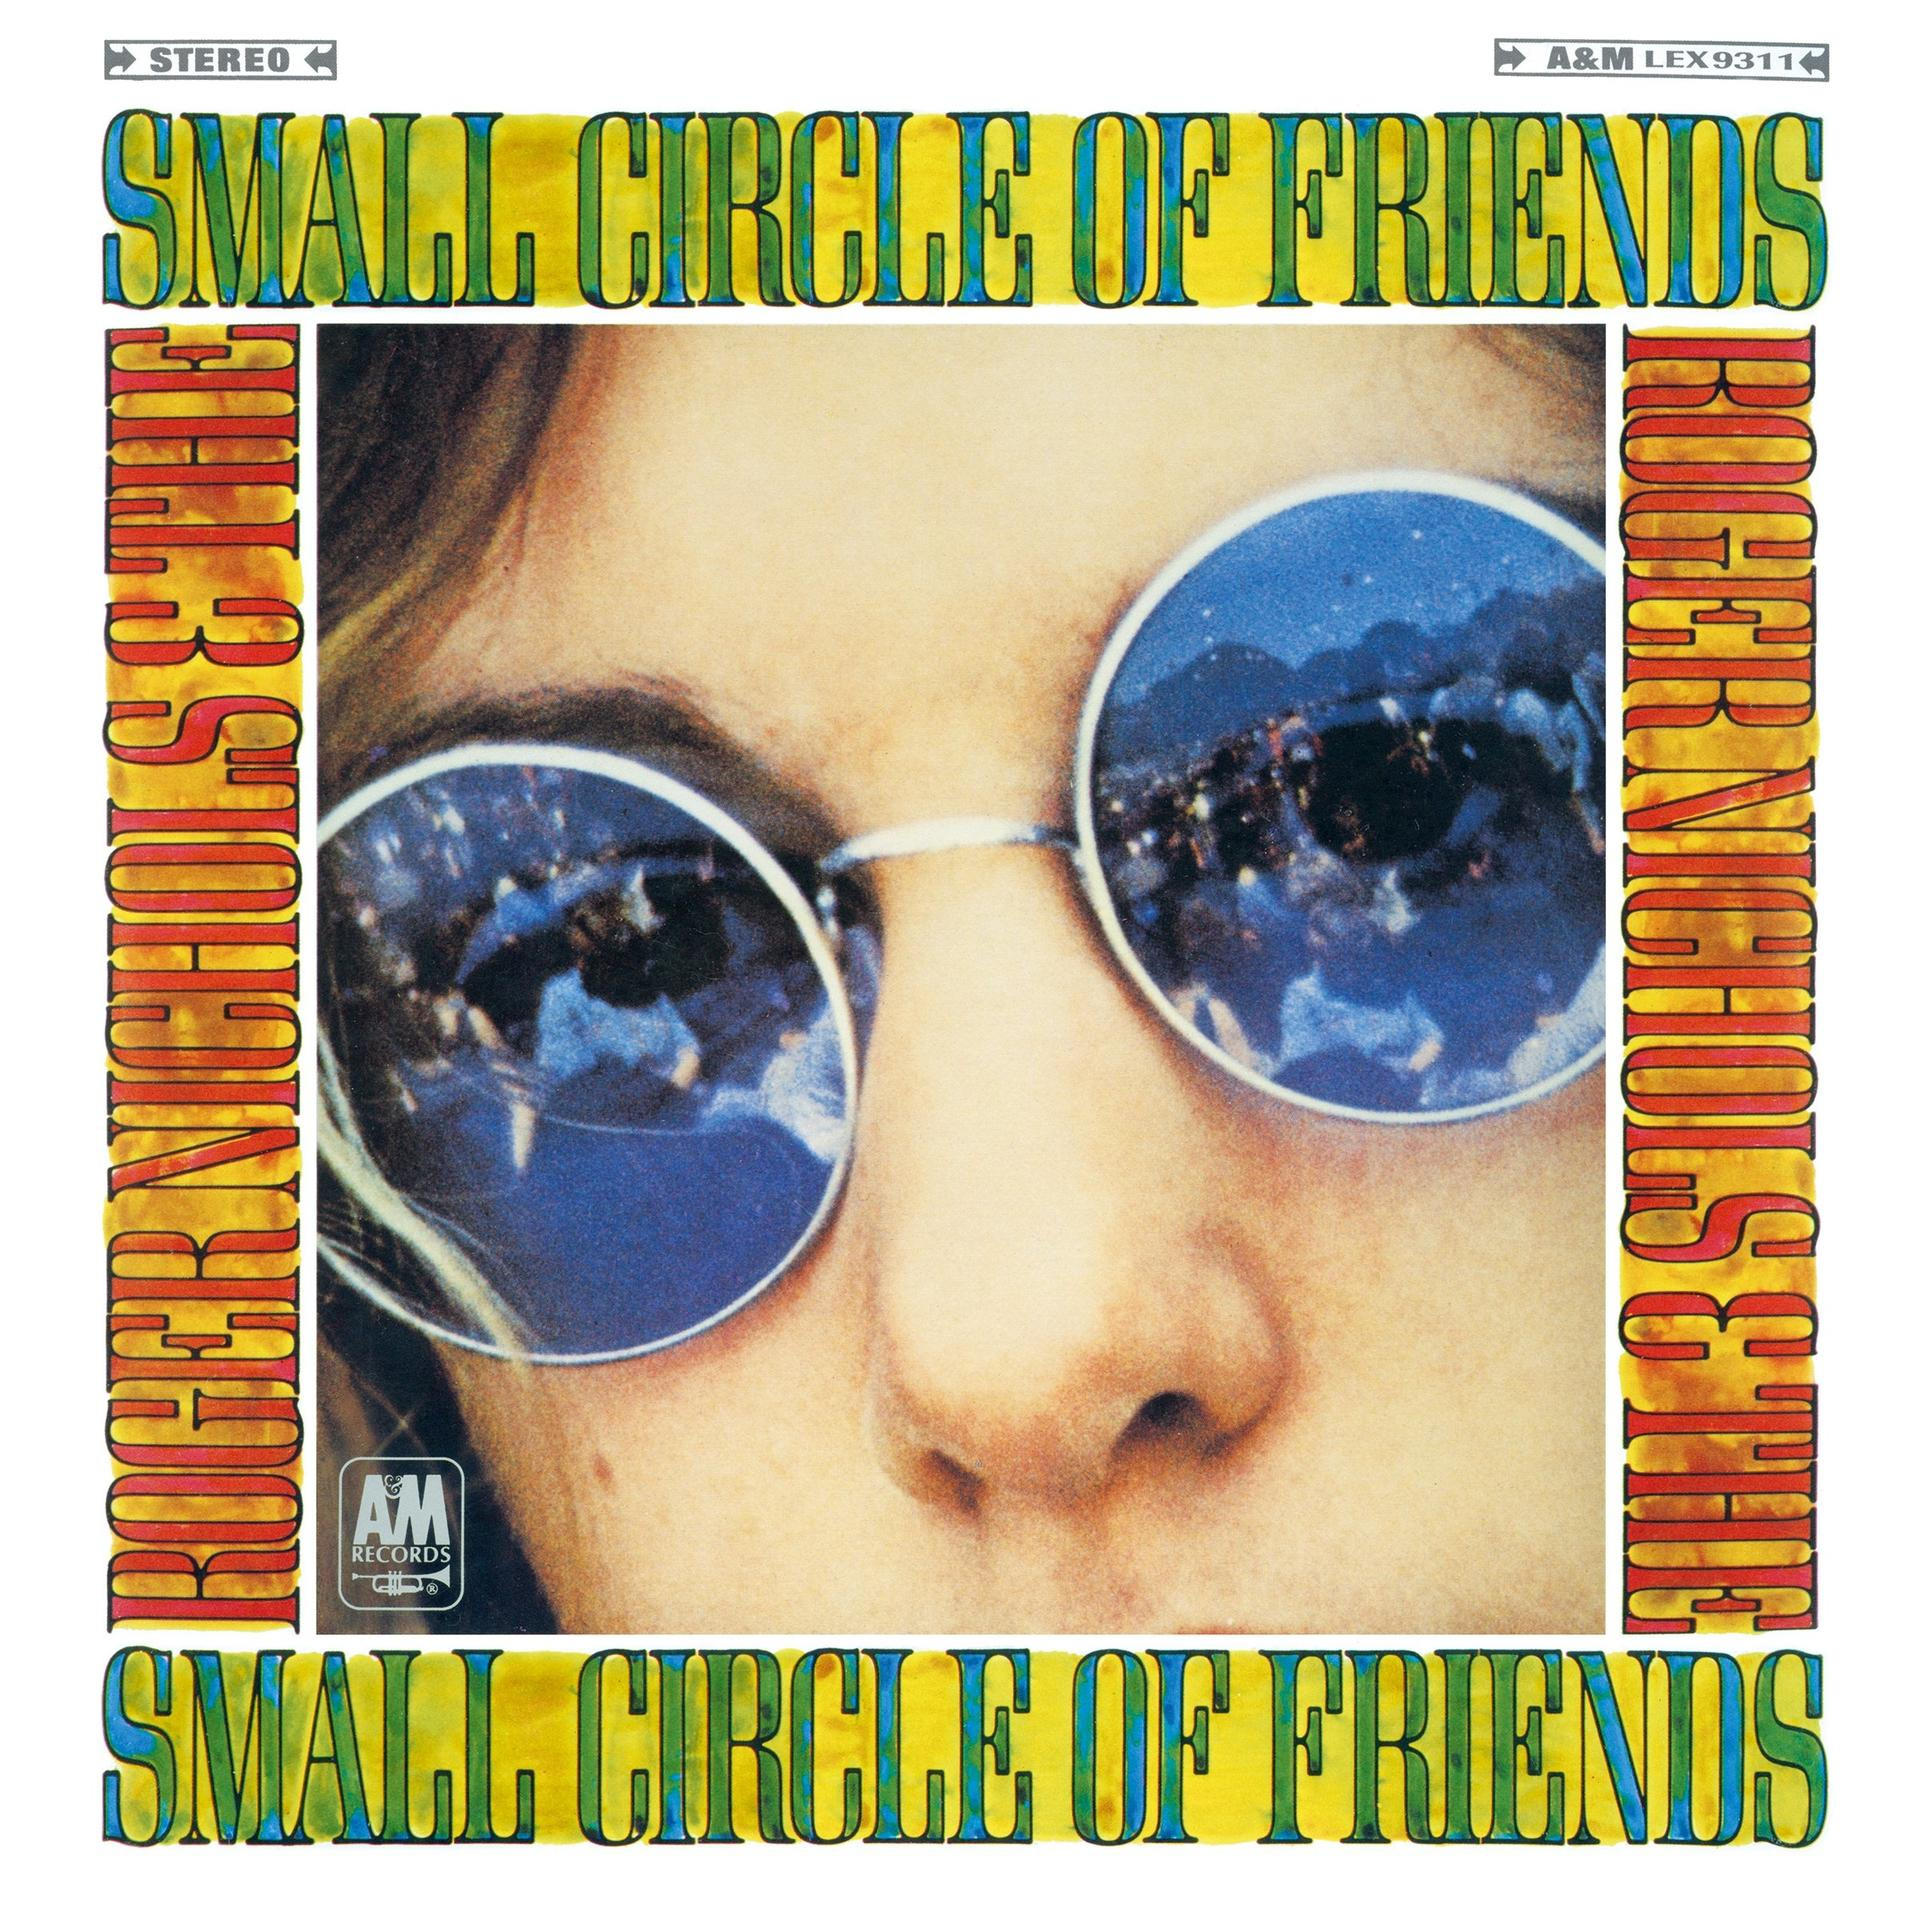 Roger Nichols - (CD) Small Roger The And - Nichols Circle